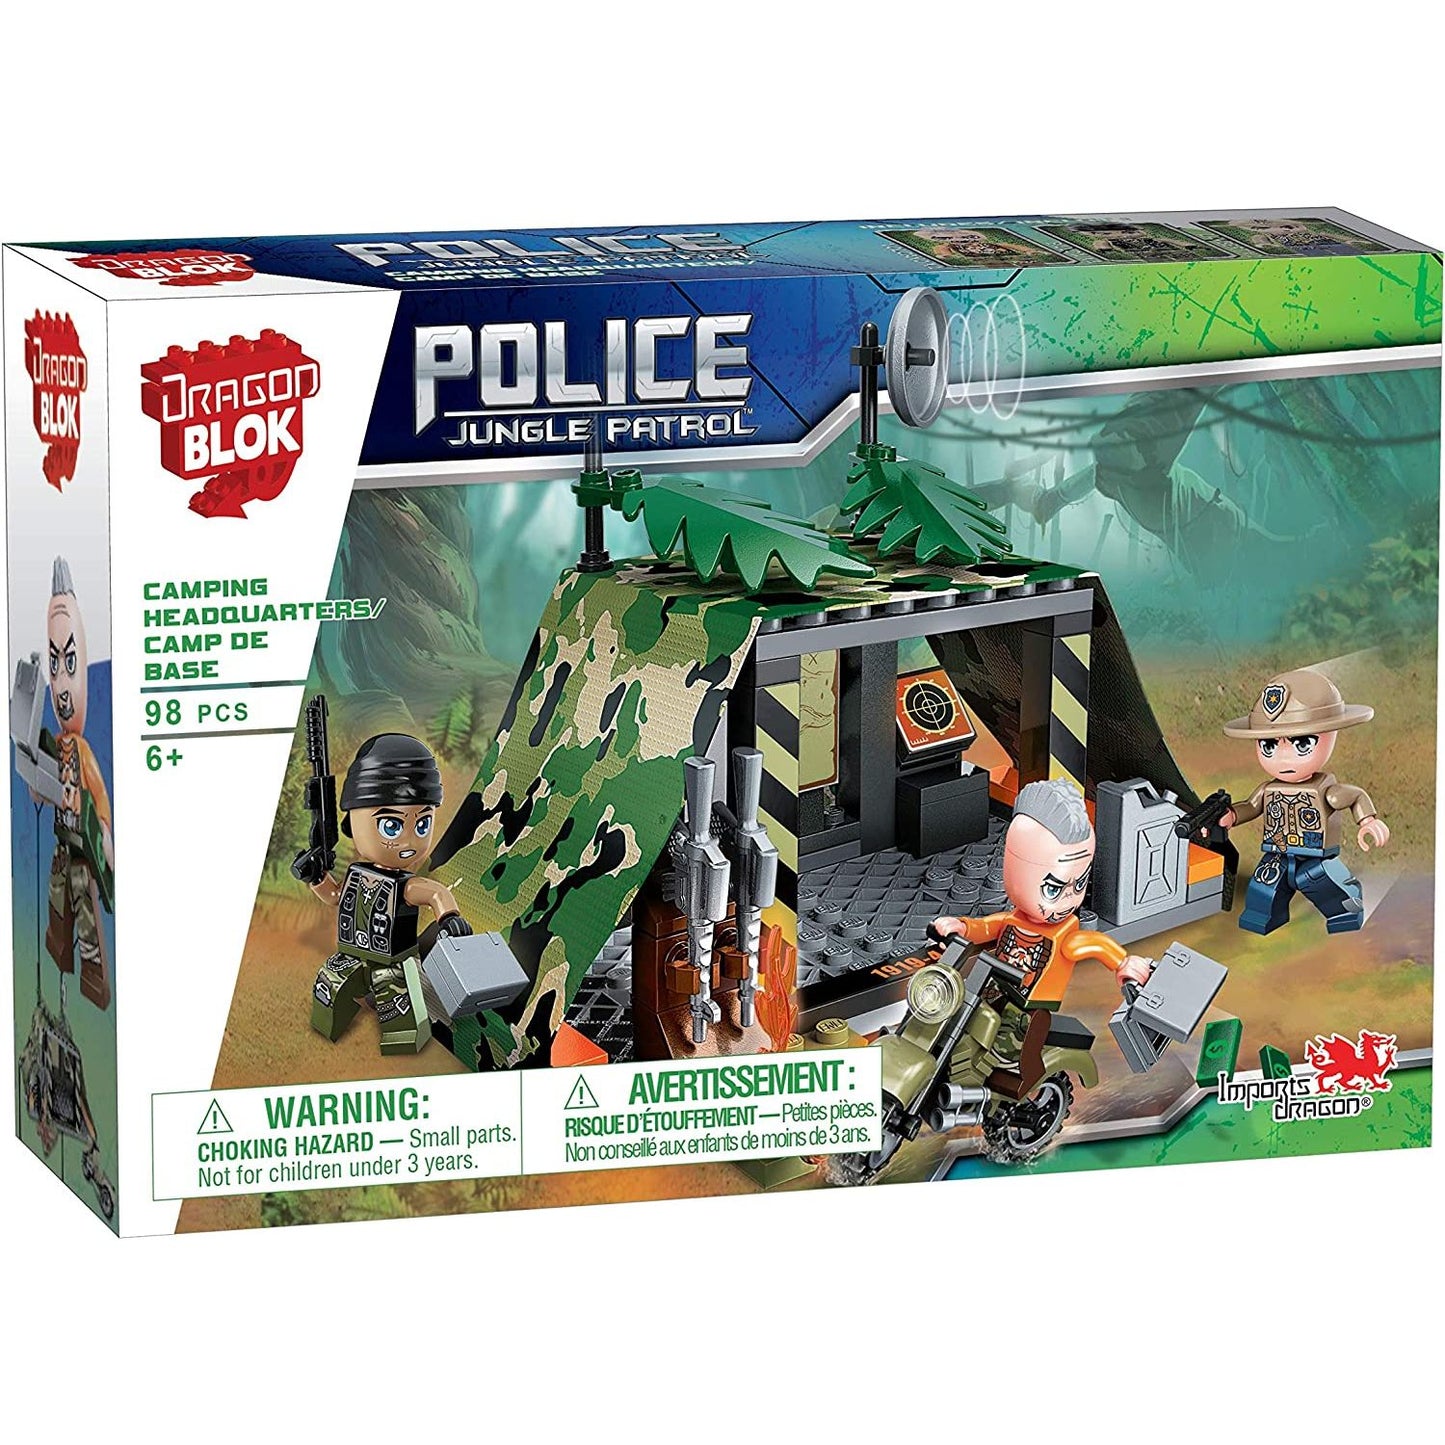 Dragon Blok - Camping Headquarters - Police Jungle Patrol